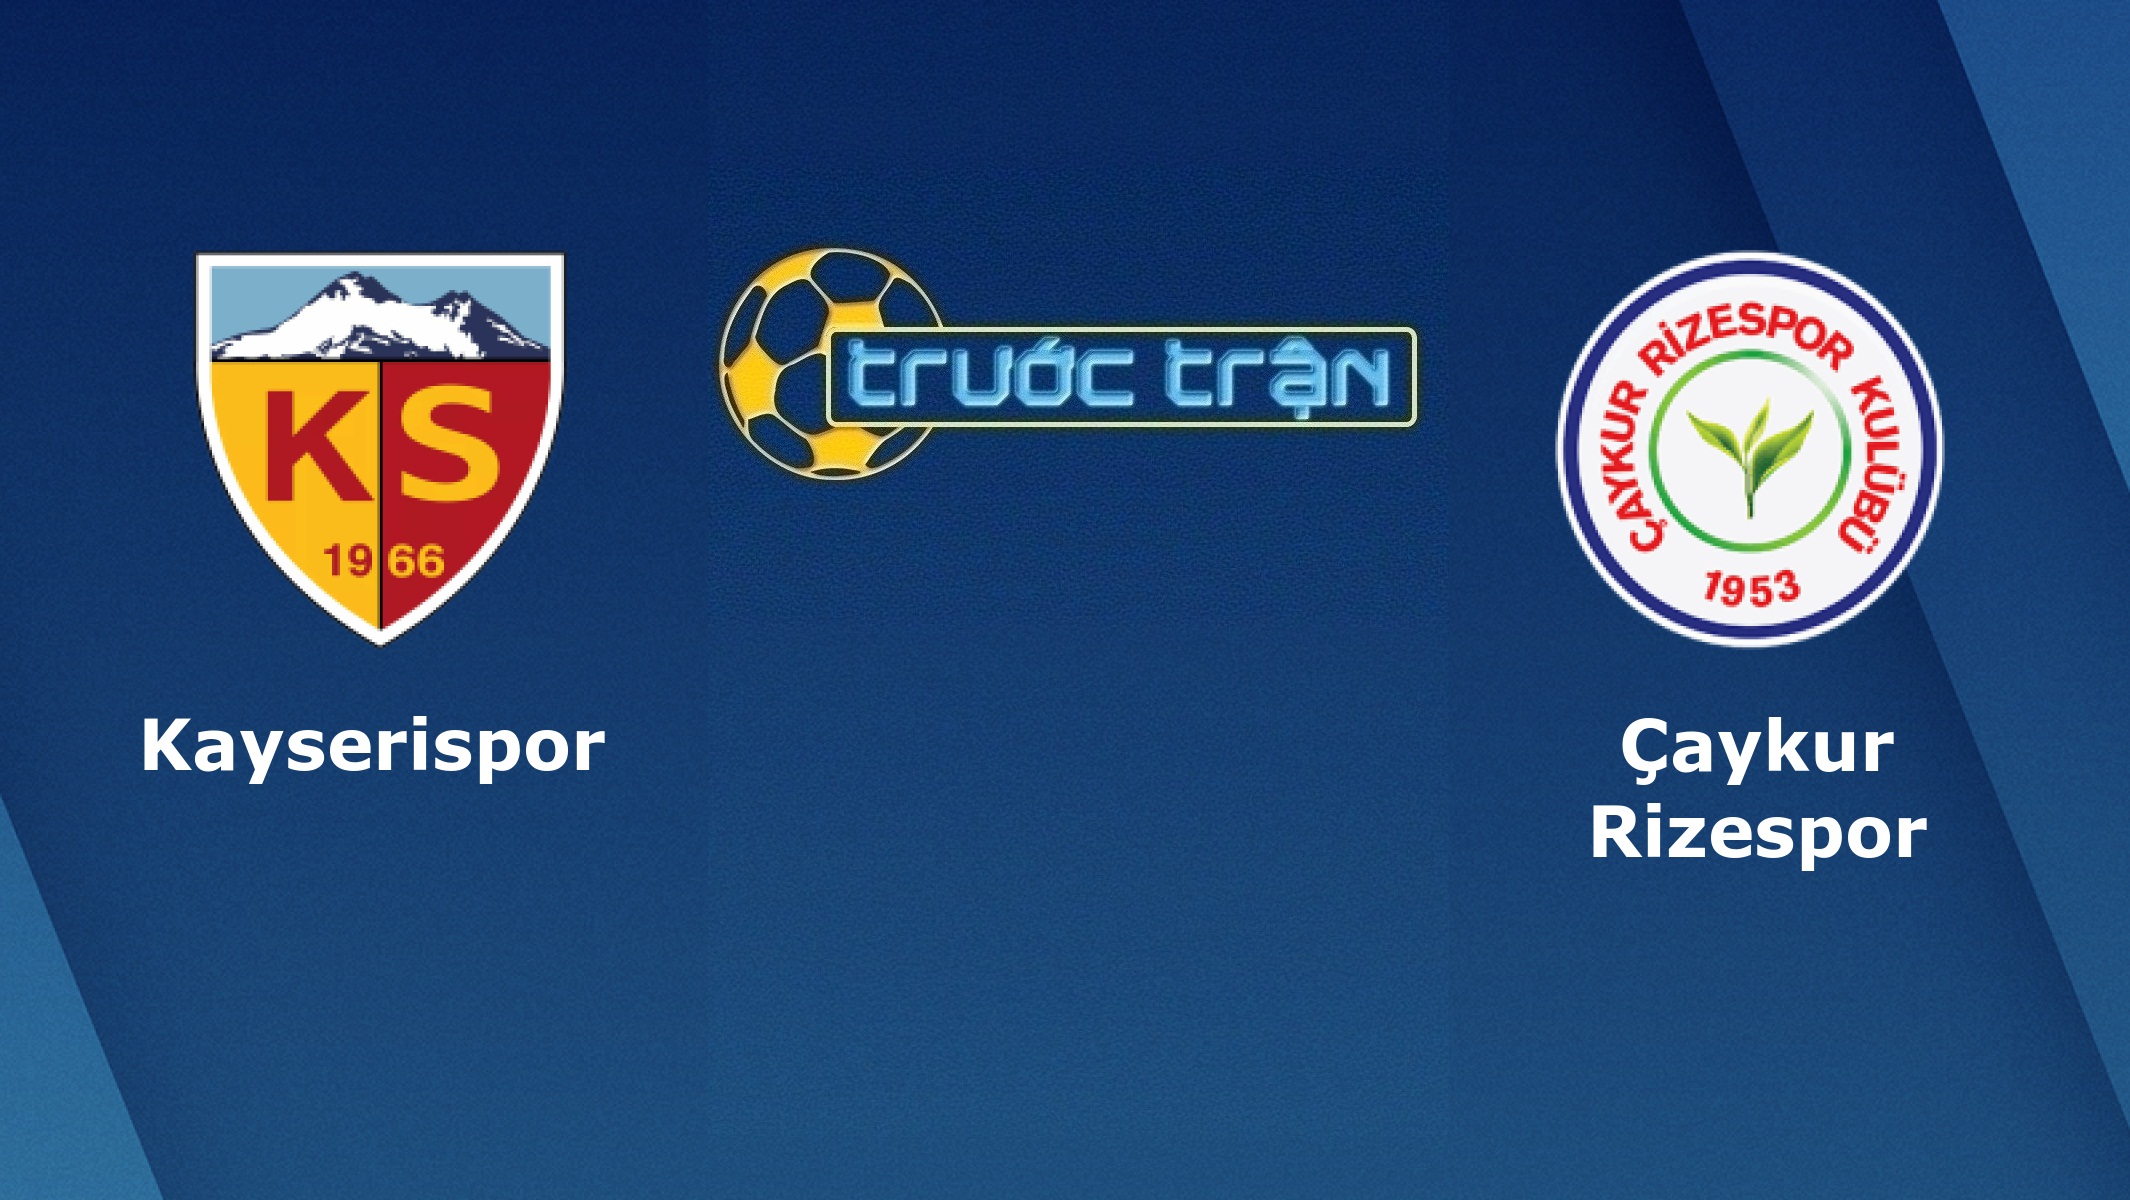 Kayserispor vs Caykur Rizespor – Tip kèo bóng đá hôm nay – 10/12